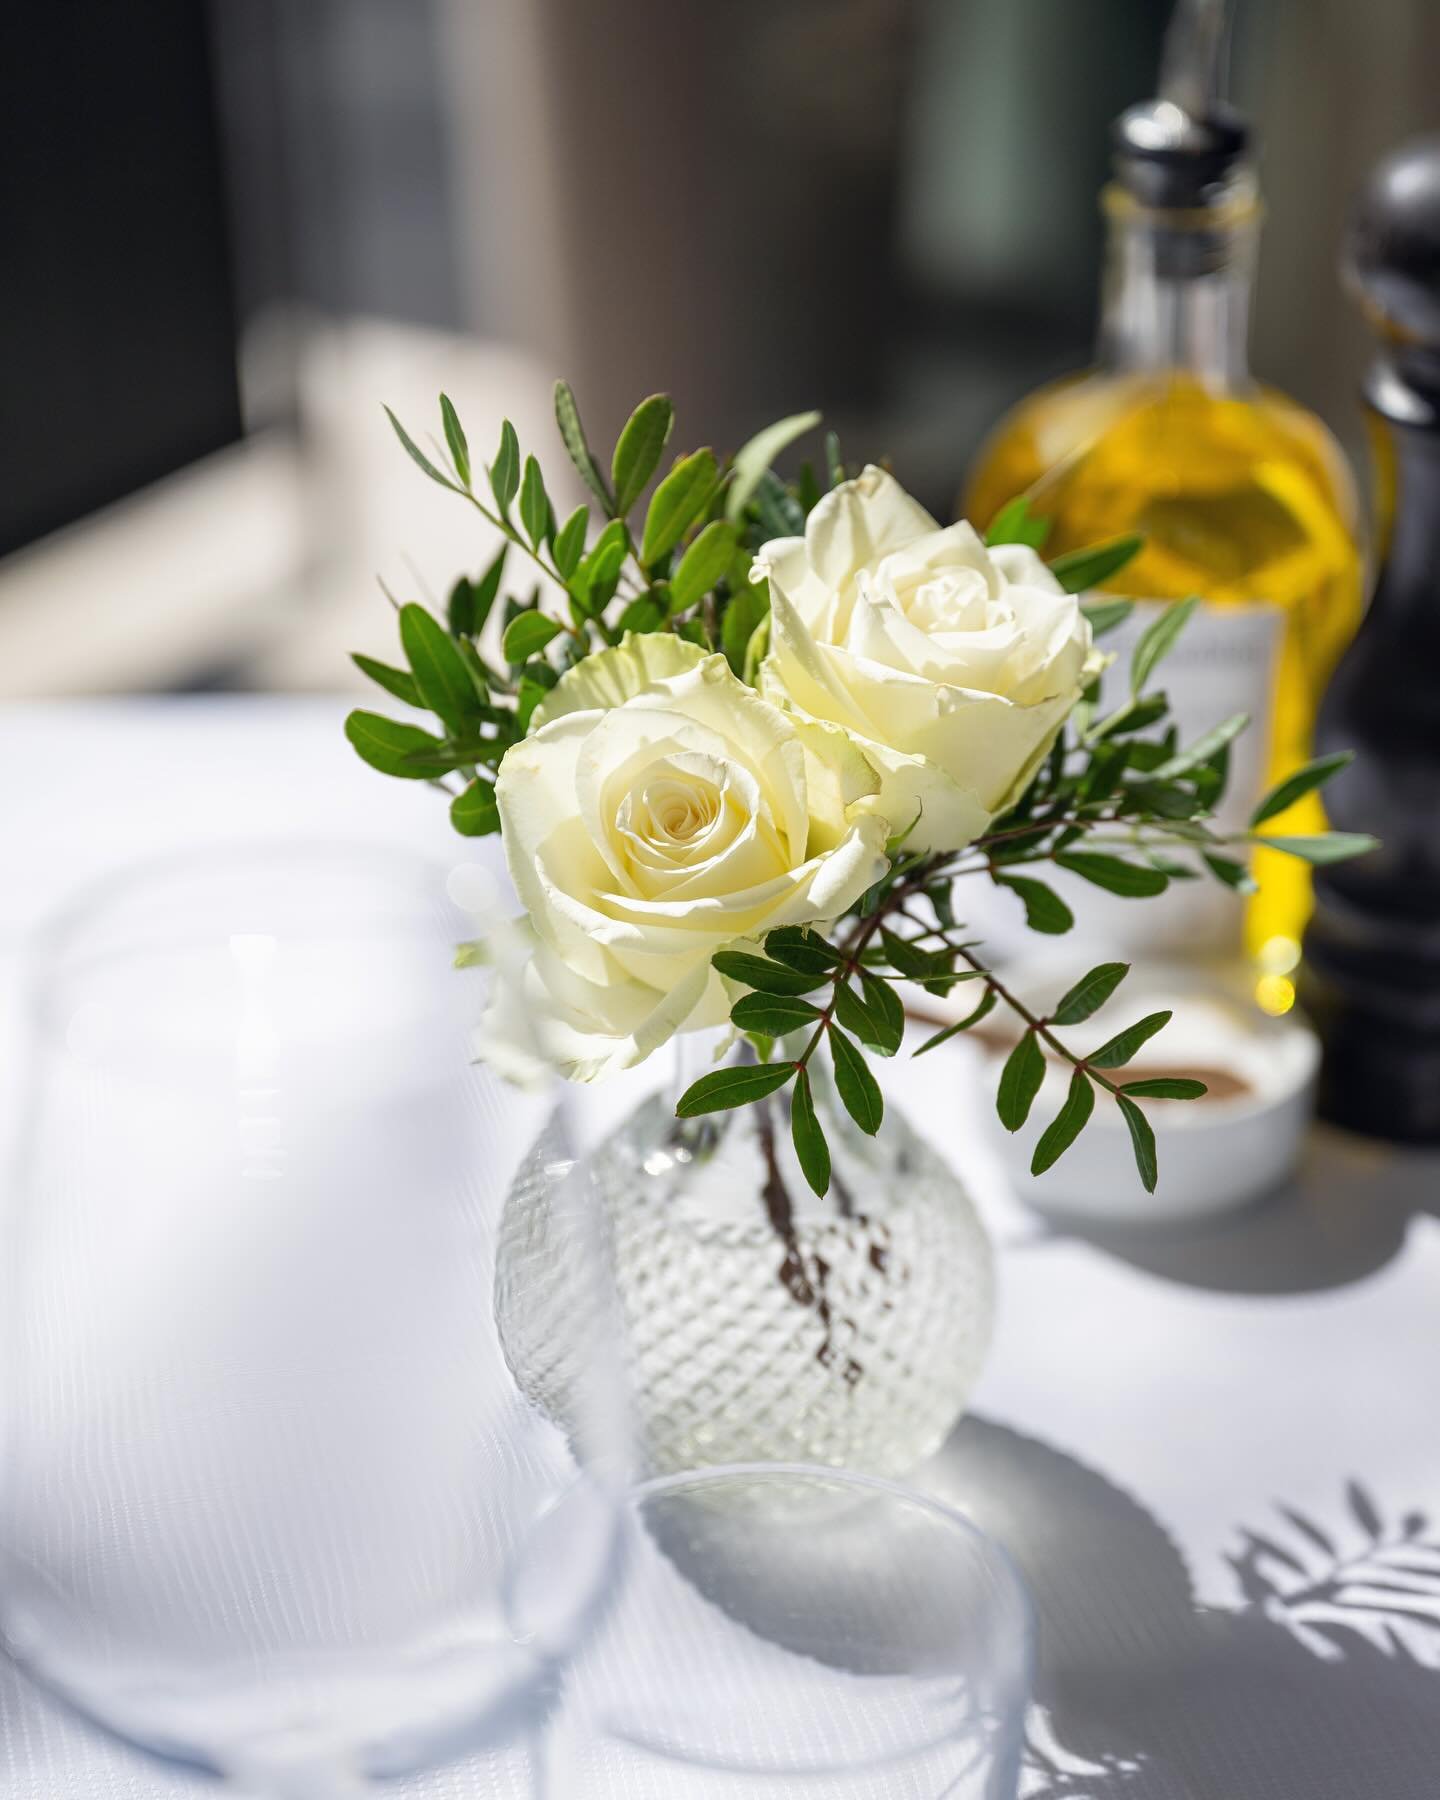 Toujours de belles fleurs fra&icirc;ches &agrave; notre table.

&mdash;&mdash;
Social Media Manager: @theupper.studio / 𝐍 𝐄 𝐒 𝐏 𝐎
&mdash;&mdash;
#NESPO #Restaurant #Nice #queduvrai #southoffrance #frenchriviera #luxurylifestyle #flowers #artsdel